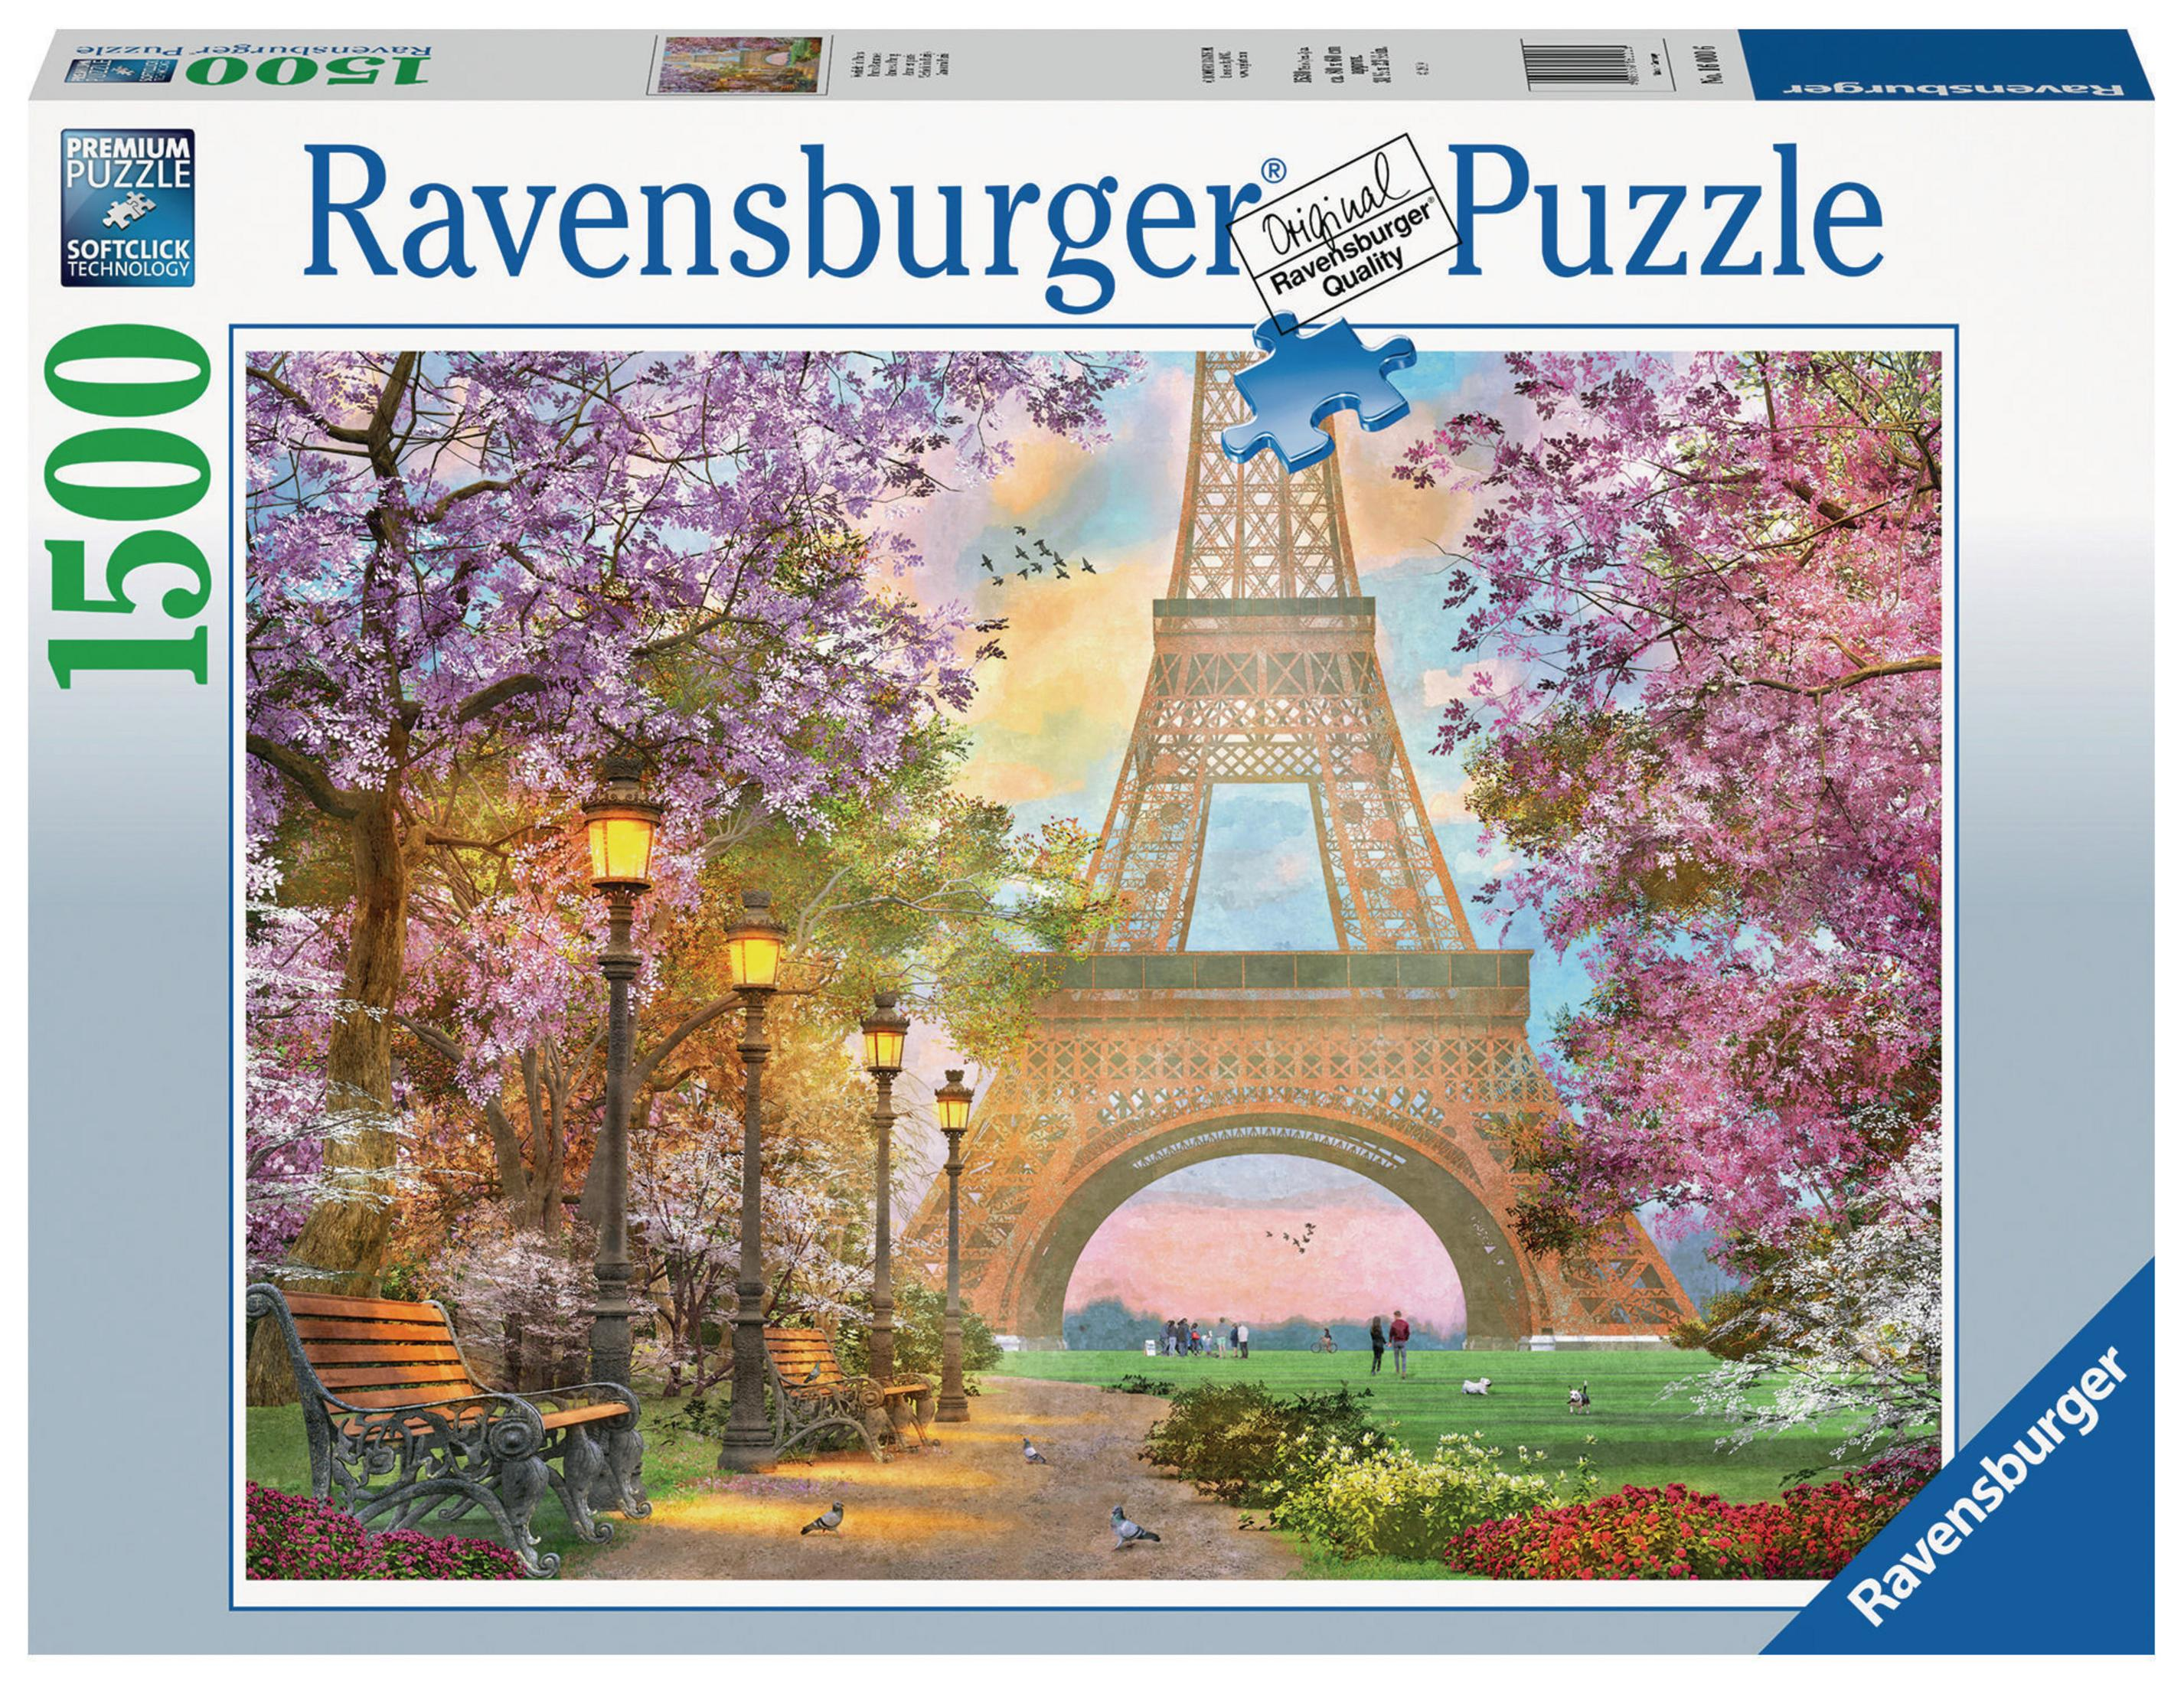 PARIS 16000 Puzzle VERLIEBT RAVENSBURGER IN